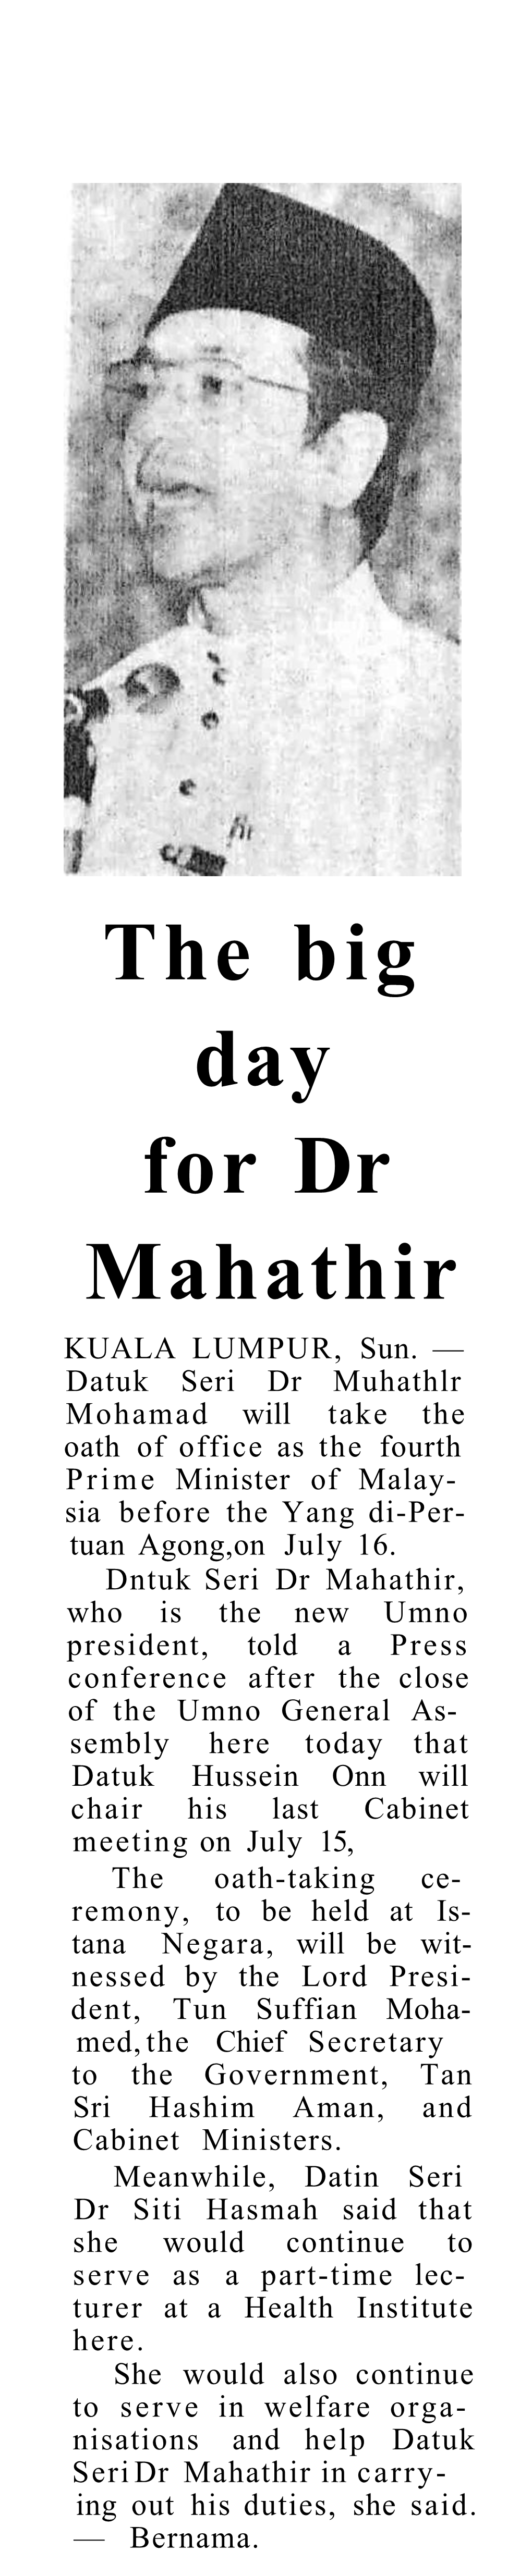 The Big Day for Dr Mahathir KUALA LUMPUR, Sun